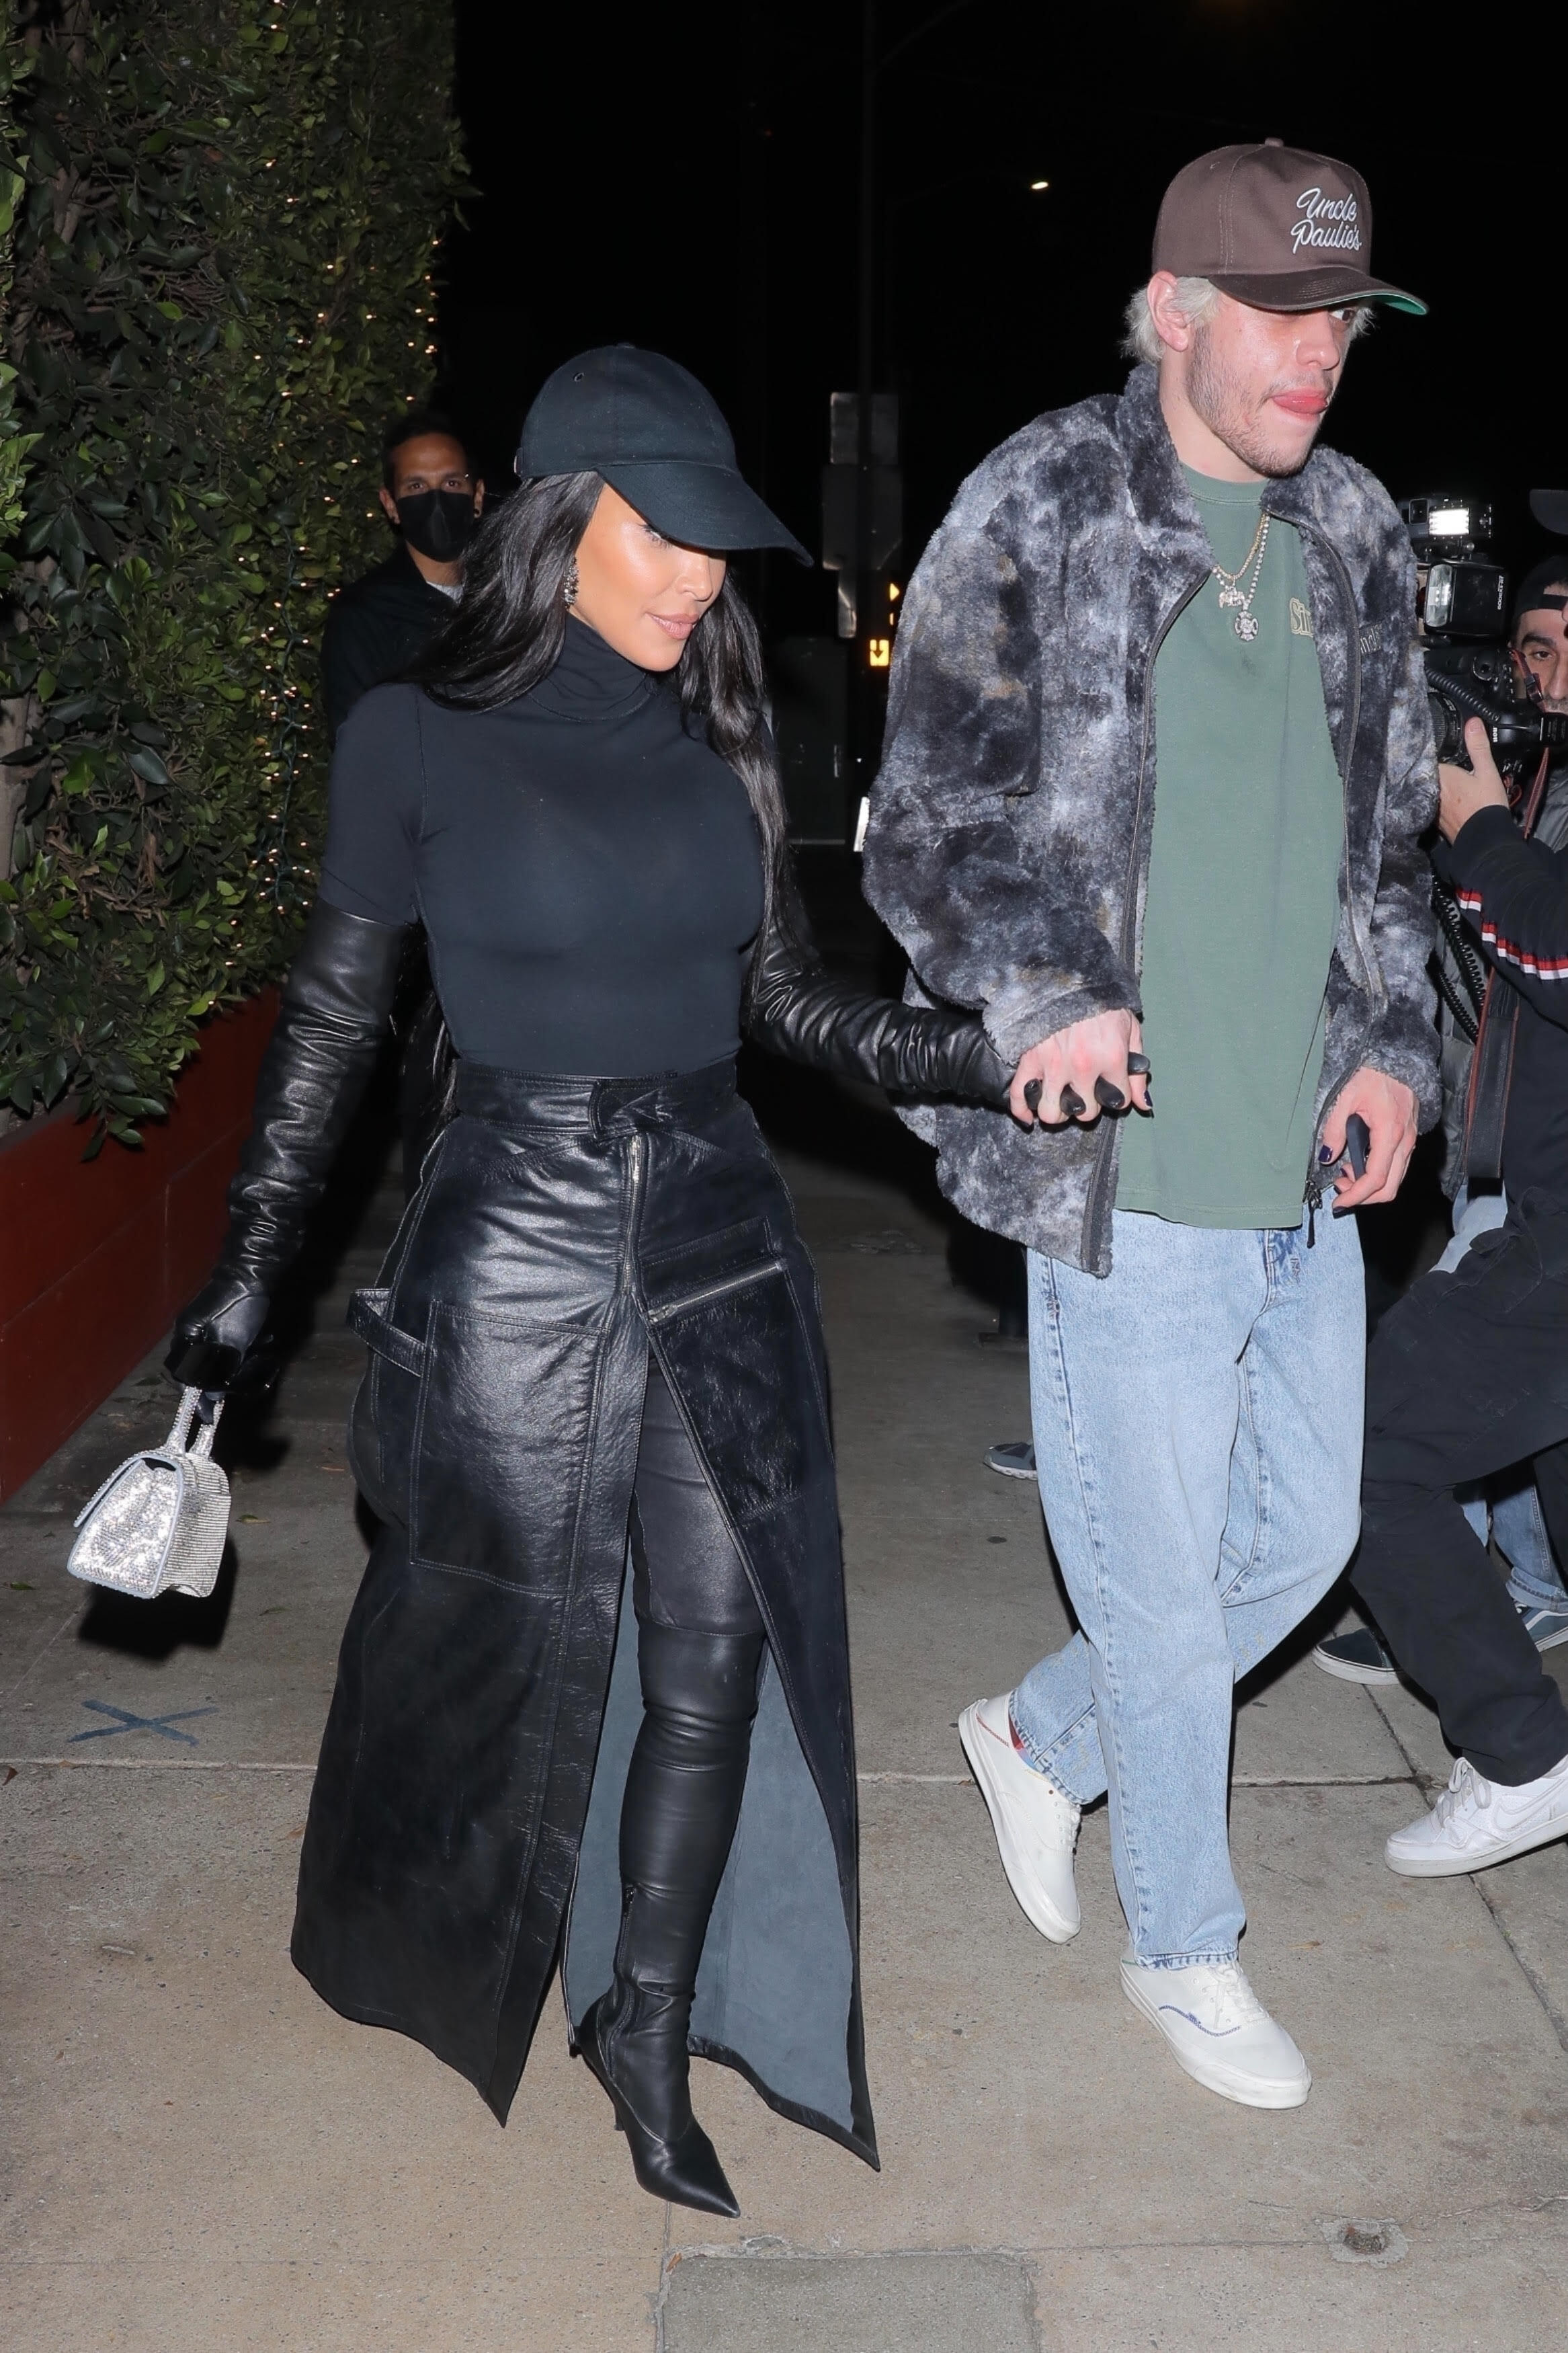 Kim Kardashian and Pete Davidson exiting a restaurant hand-in-hand